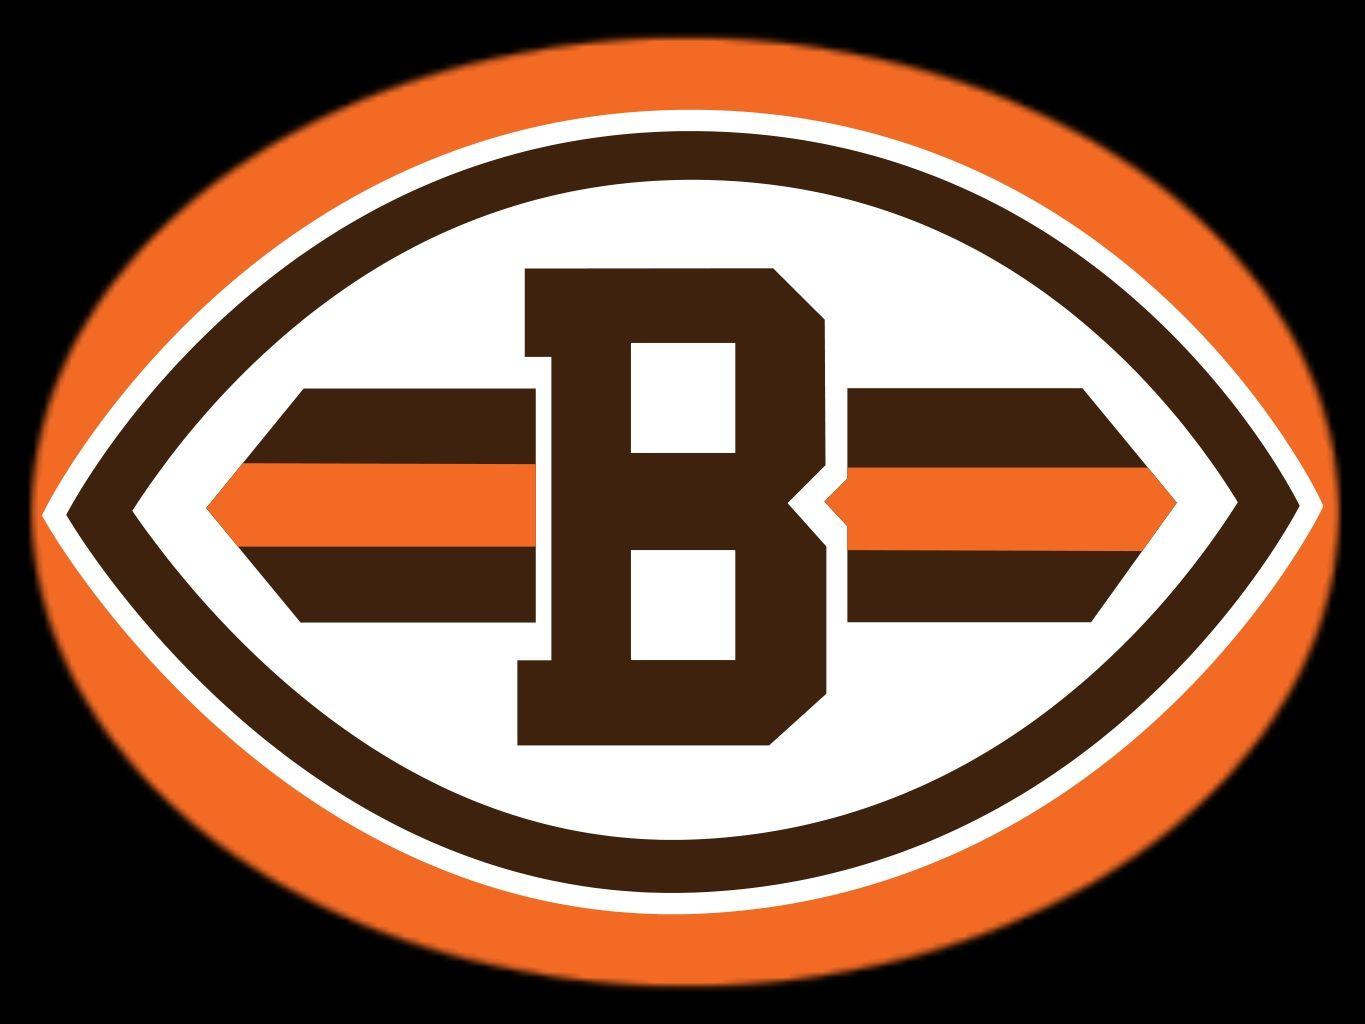 Browns Helmet. Team Logos. Cleveland Browns